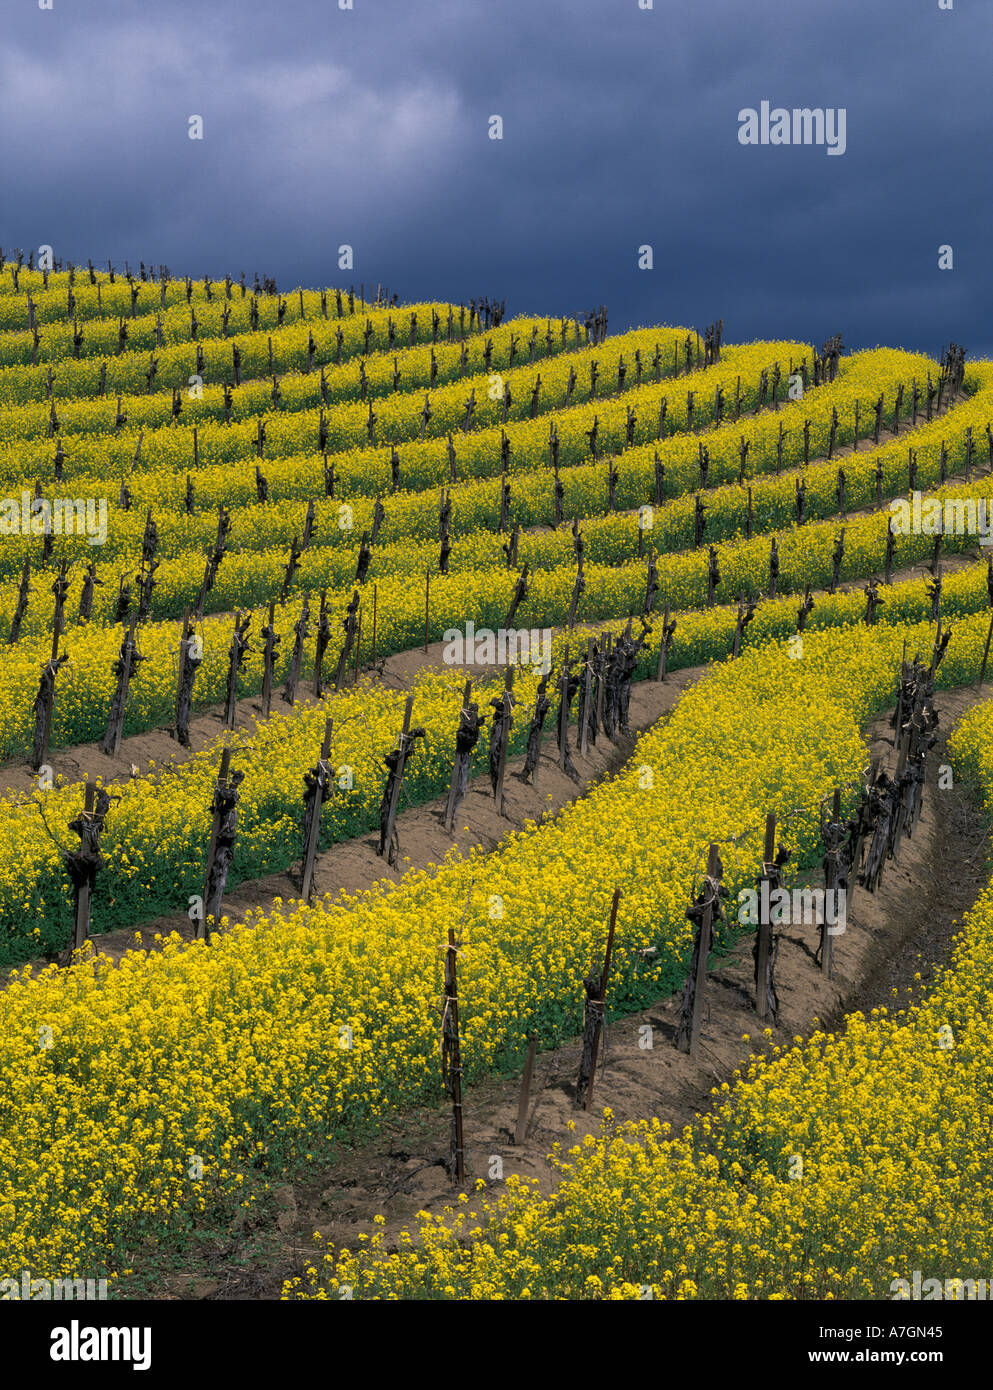 USA, California, Napa Valley, Carneros Ava. Springtime bloom of mustard between rows of grapevines. Stock Photo